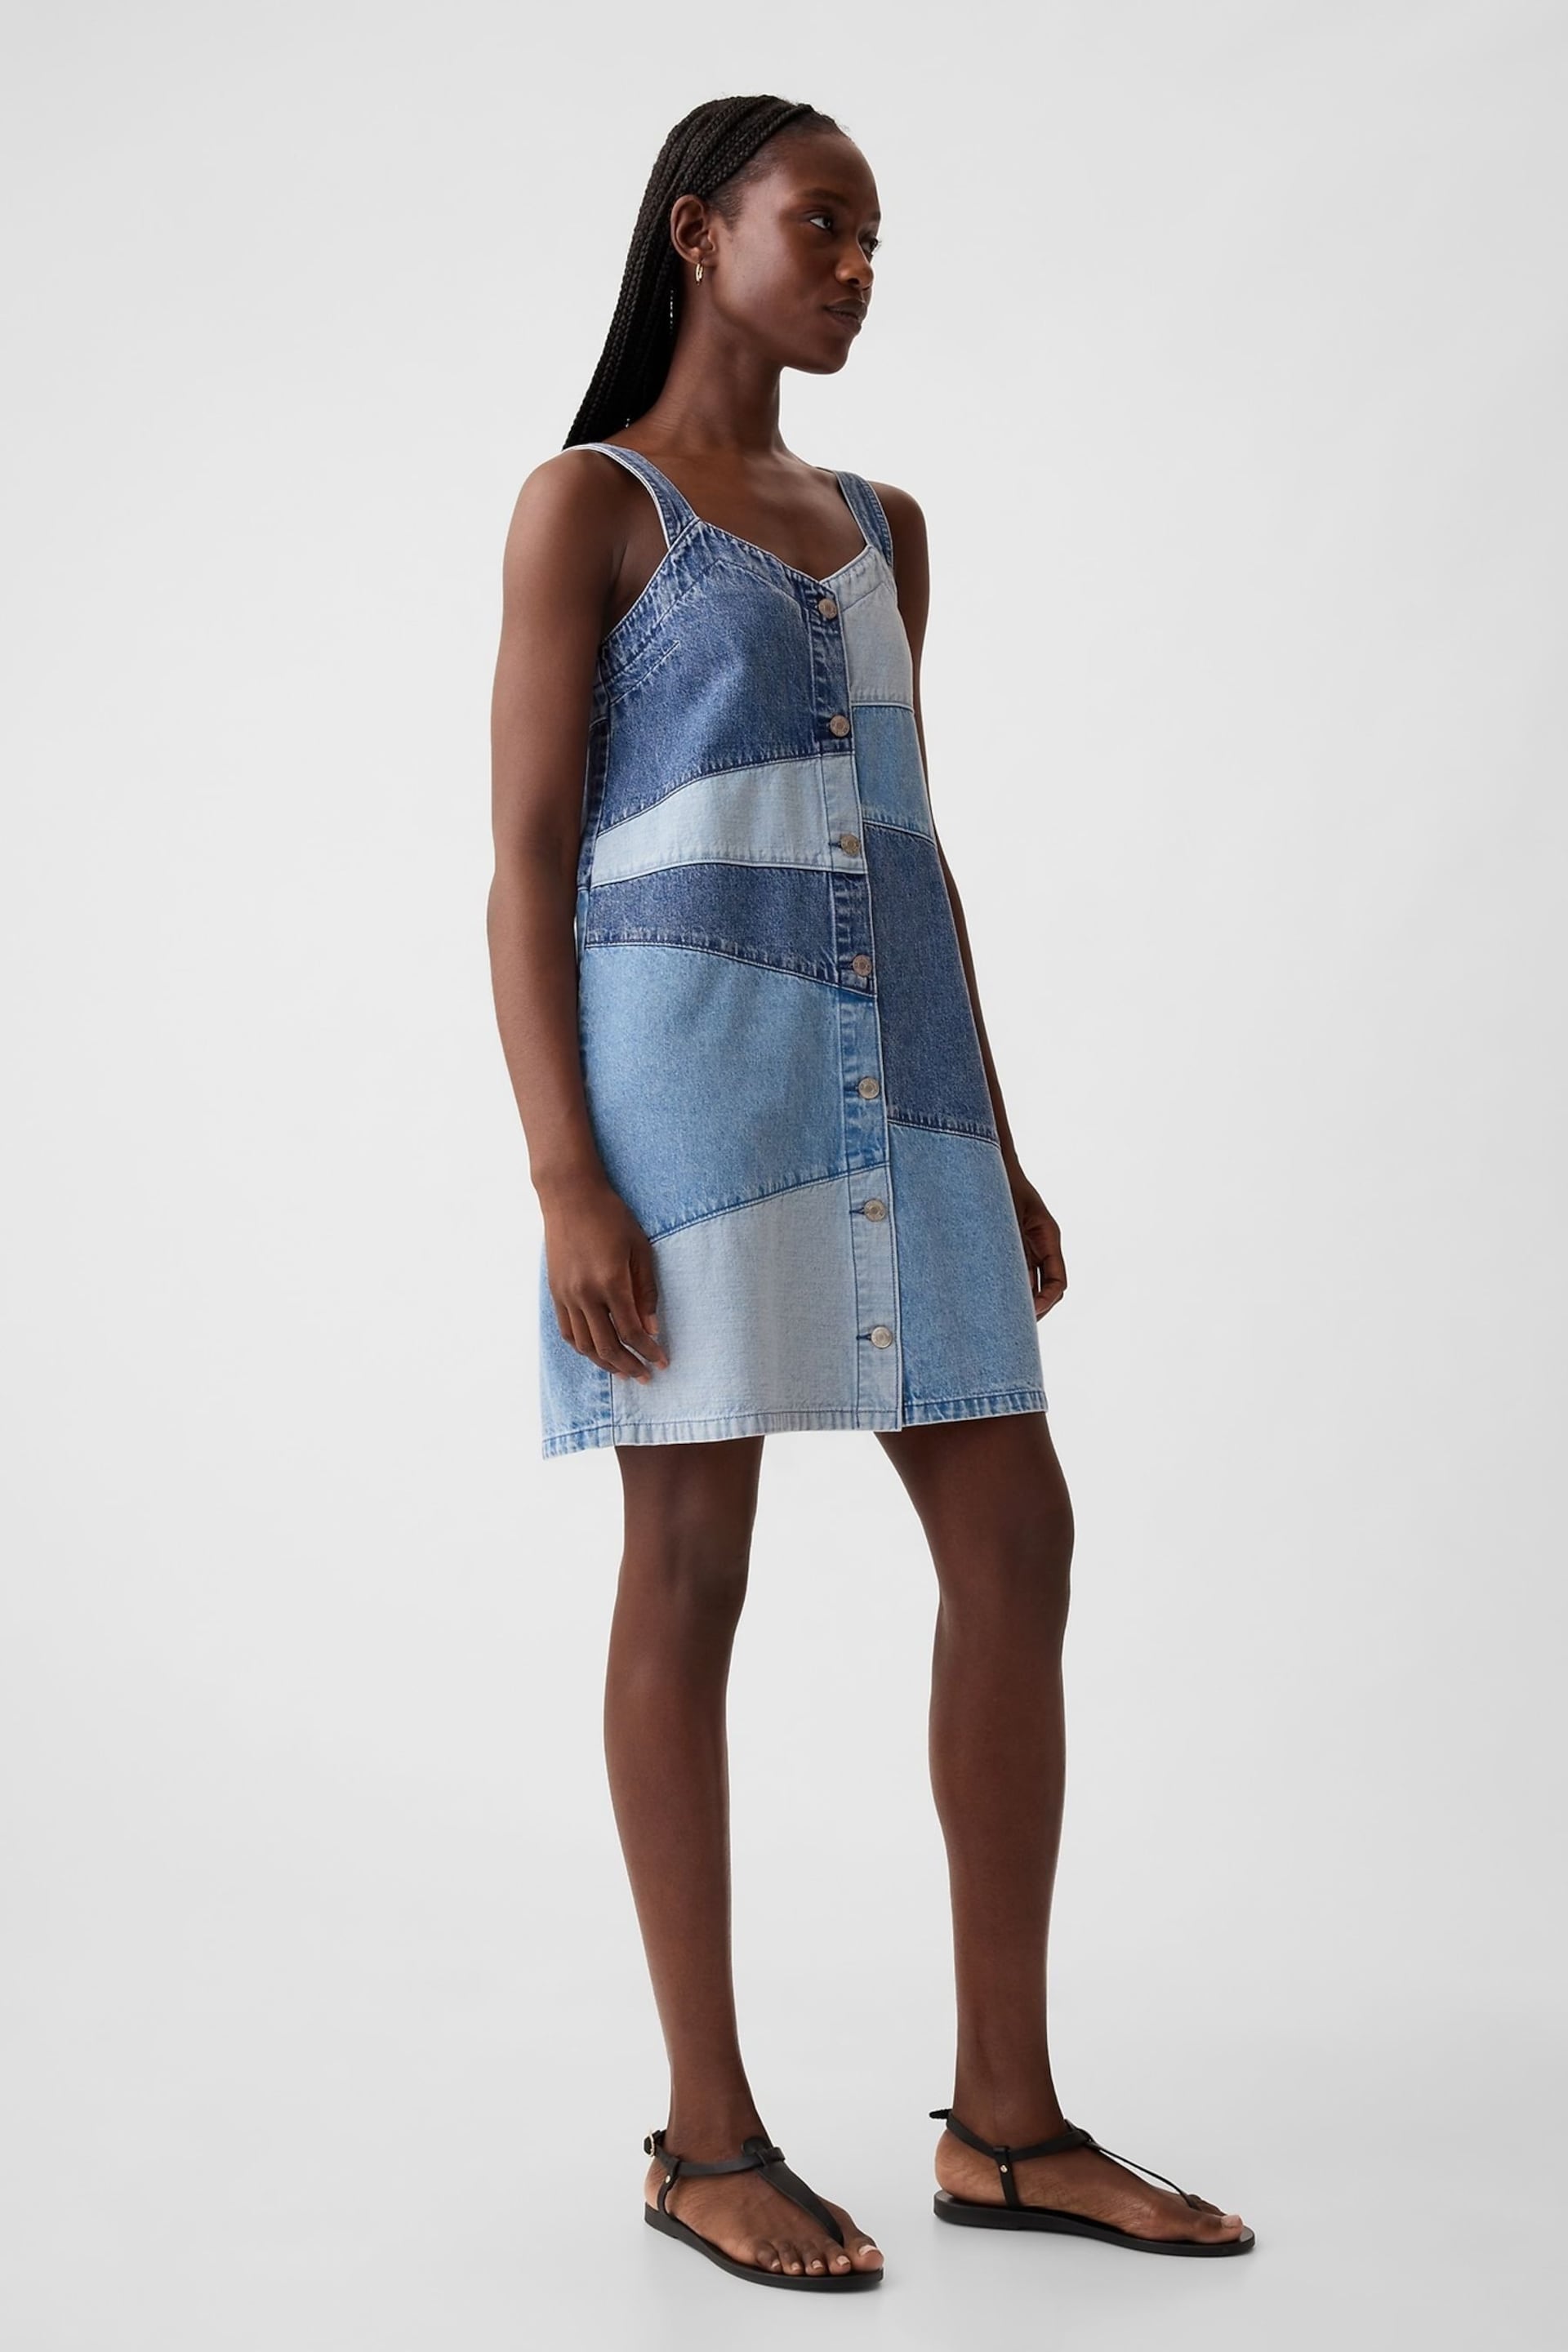 Gap Blue Patchwork Denim Mini Dress - Image 5 of 6